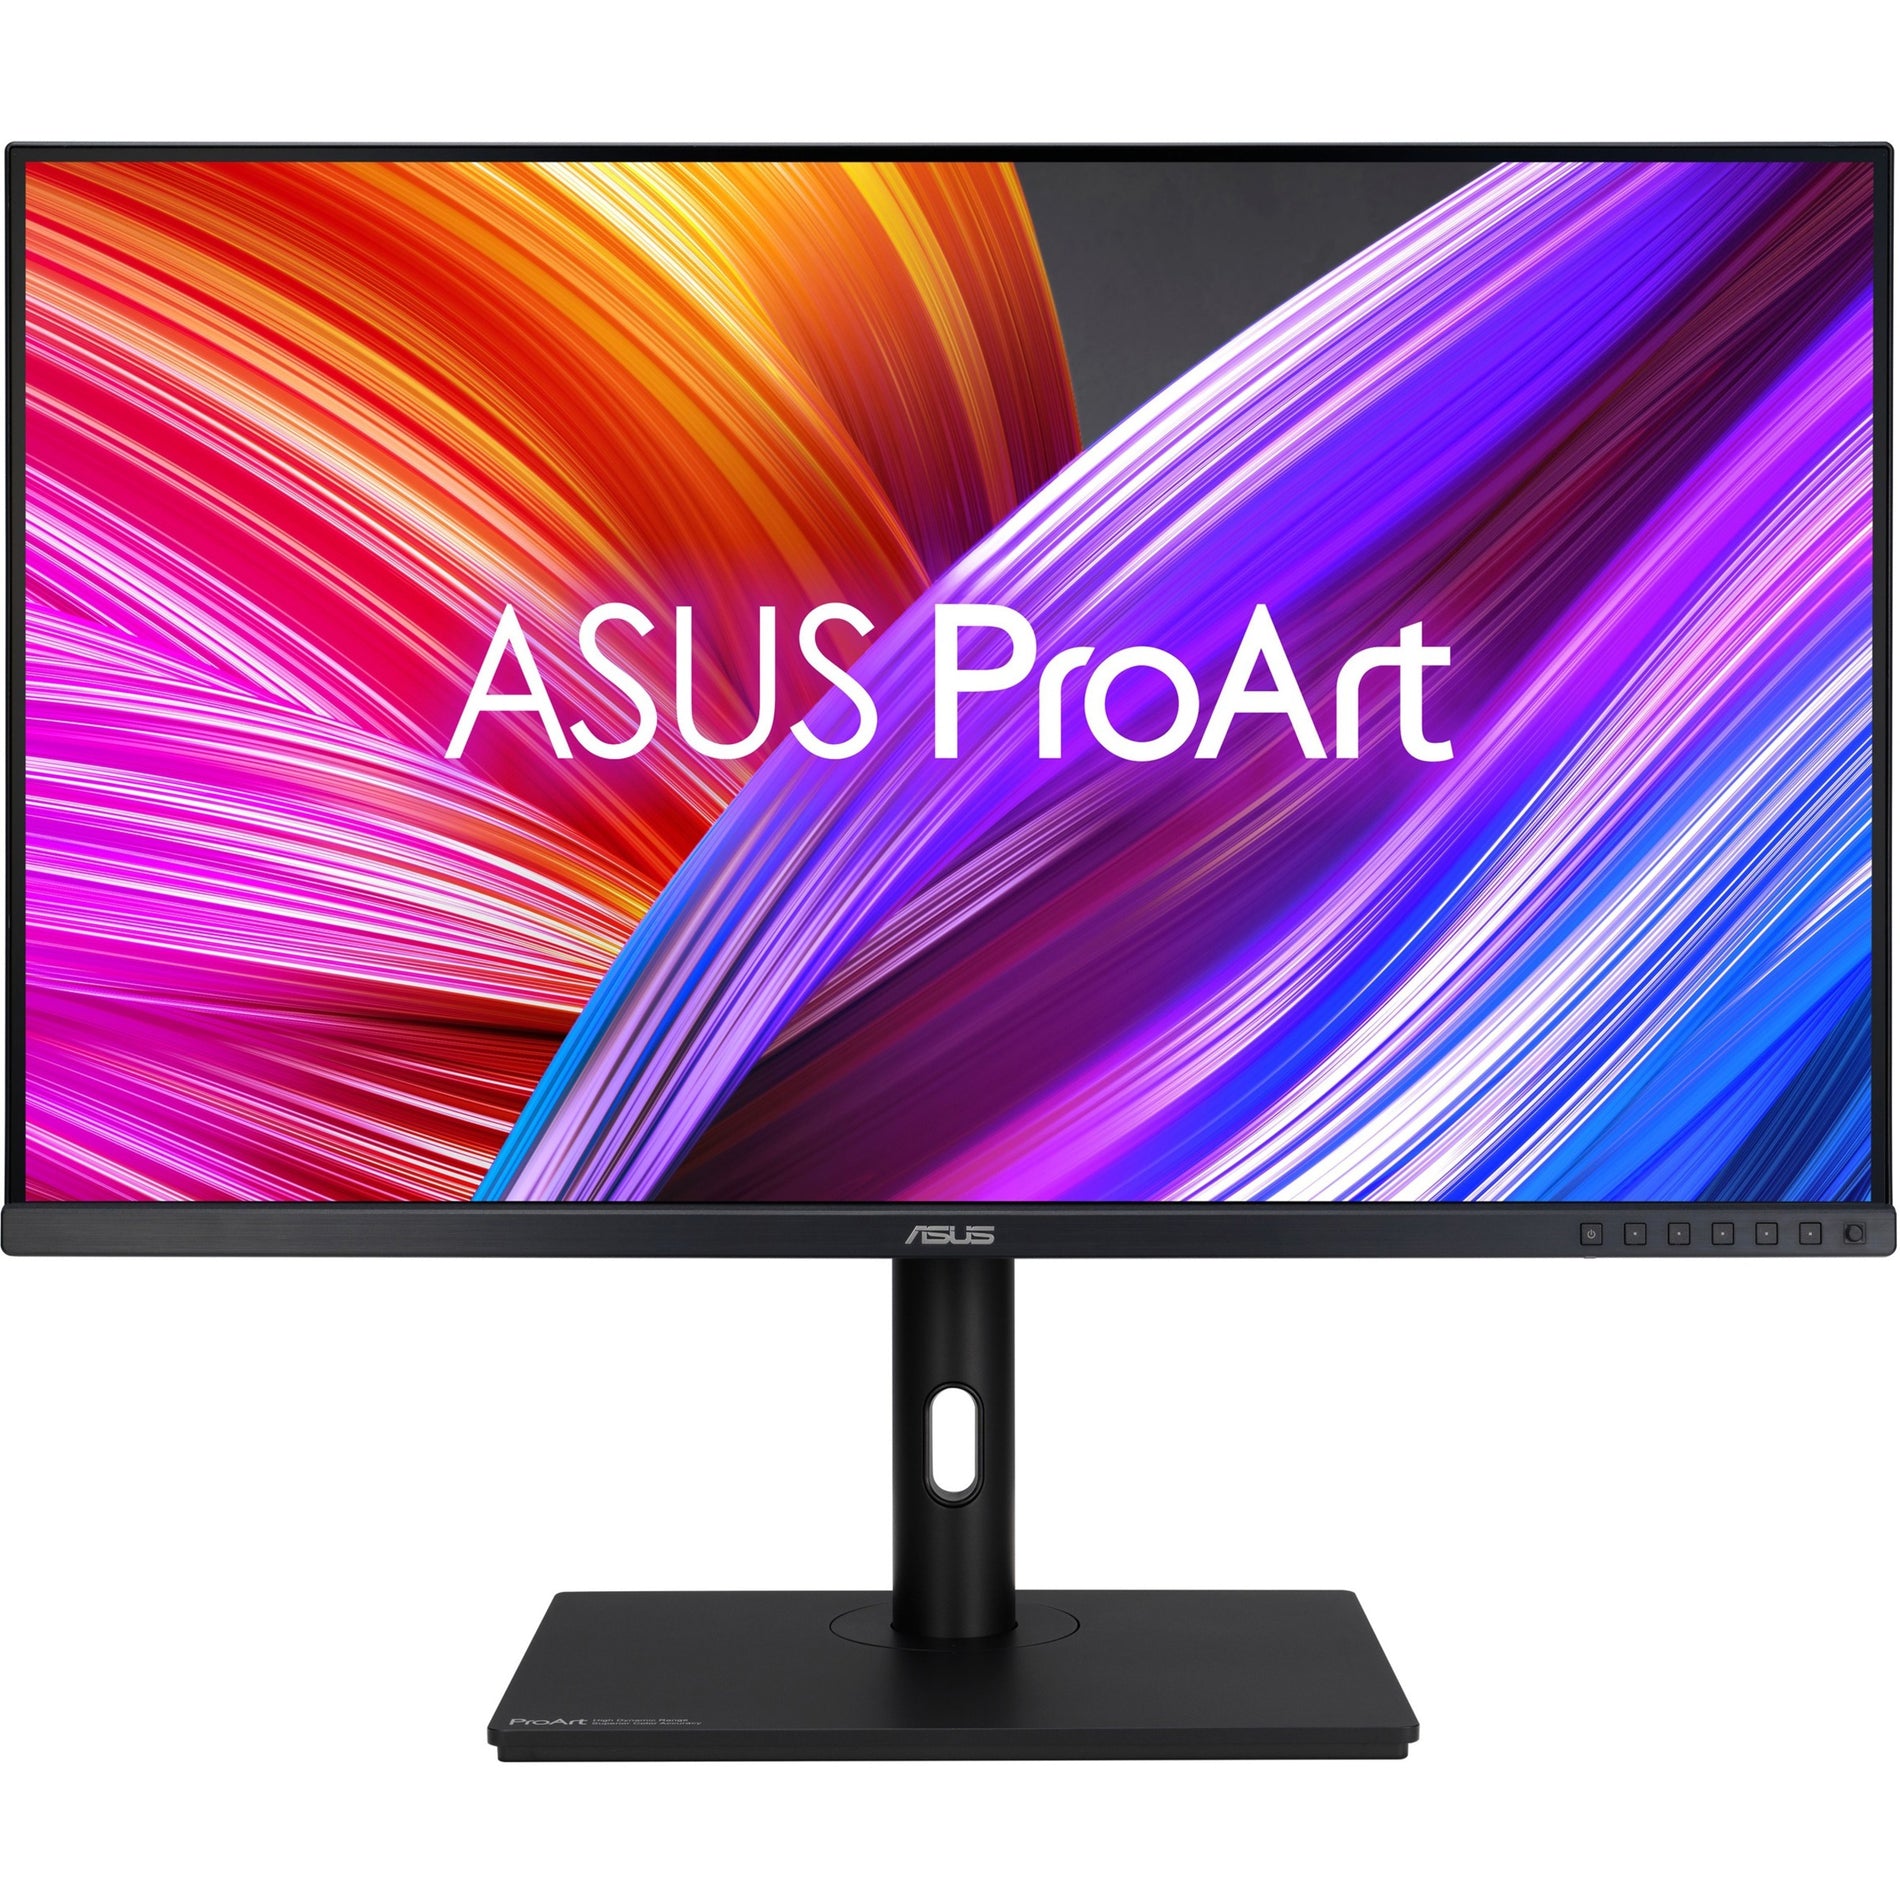 Asus ProArt PA328QV 31.5" WQHD LED LCD Monitor - 16:9 (PA328QV) Front image